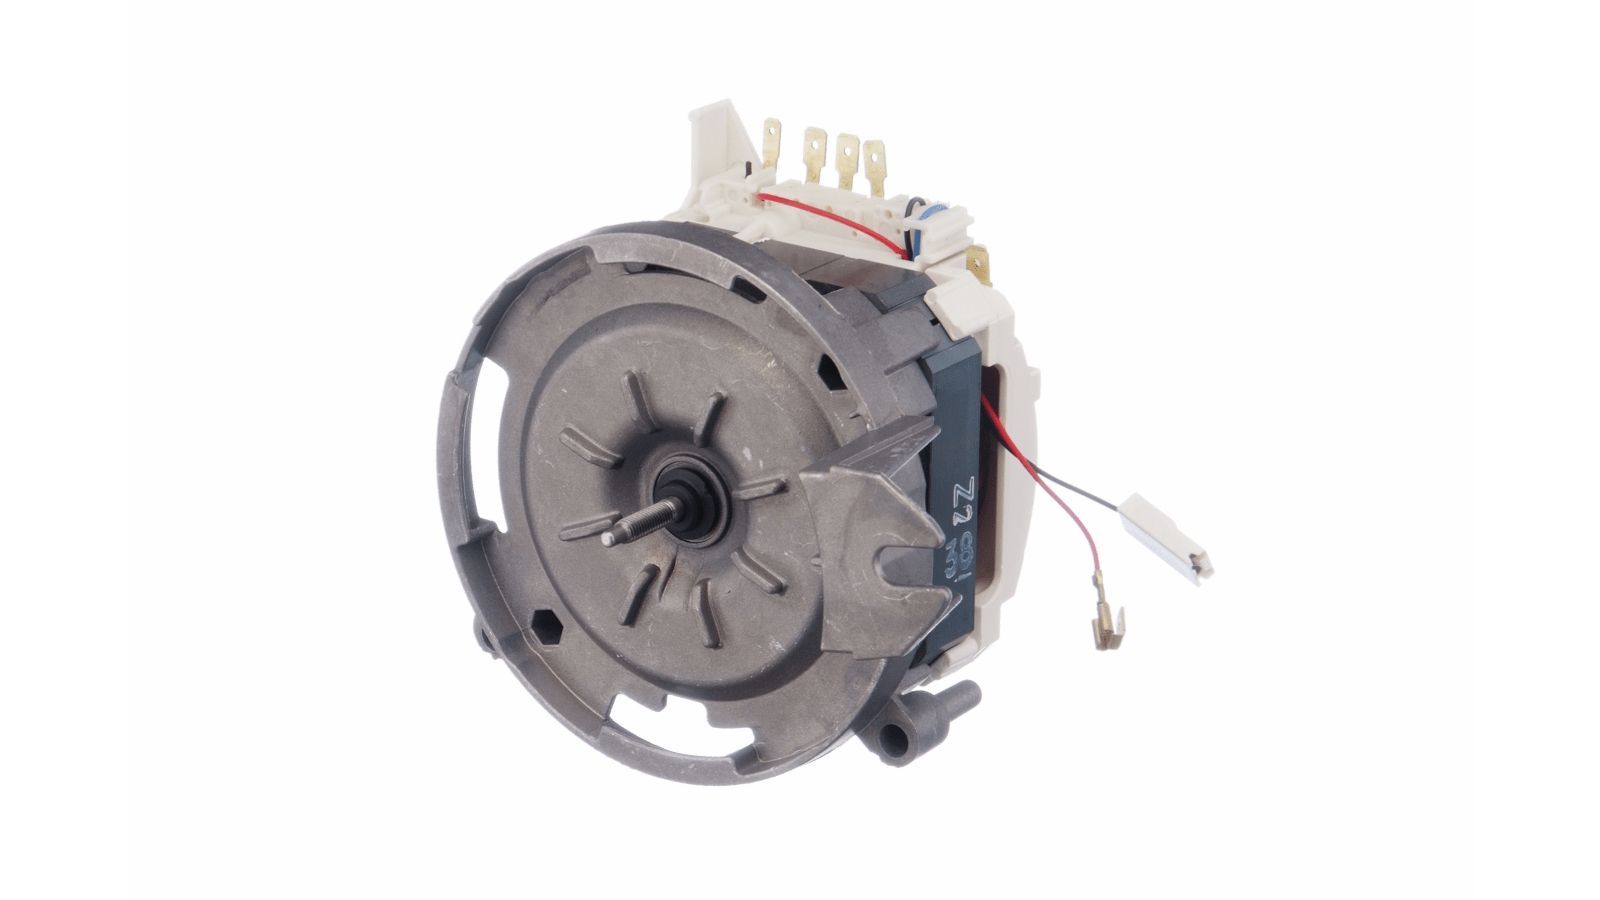 Circulating Pump Motor for Bosch Siemens Dishwashers - Part nr. BSH 00645222 BSH - Bosch / Siemens